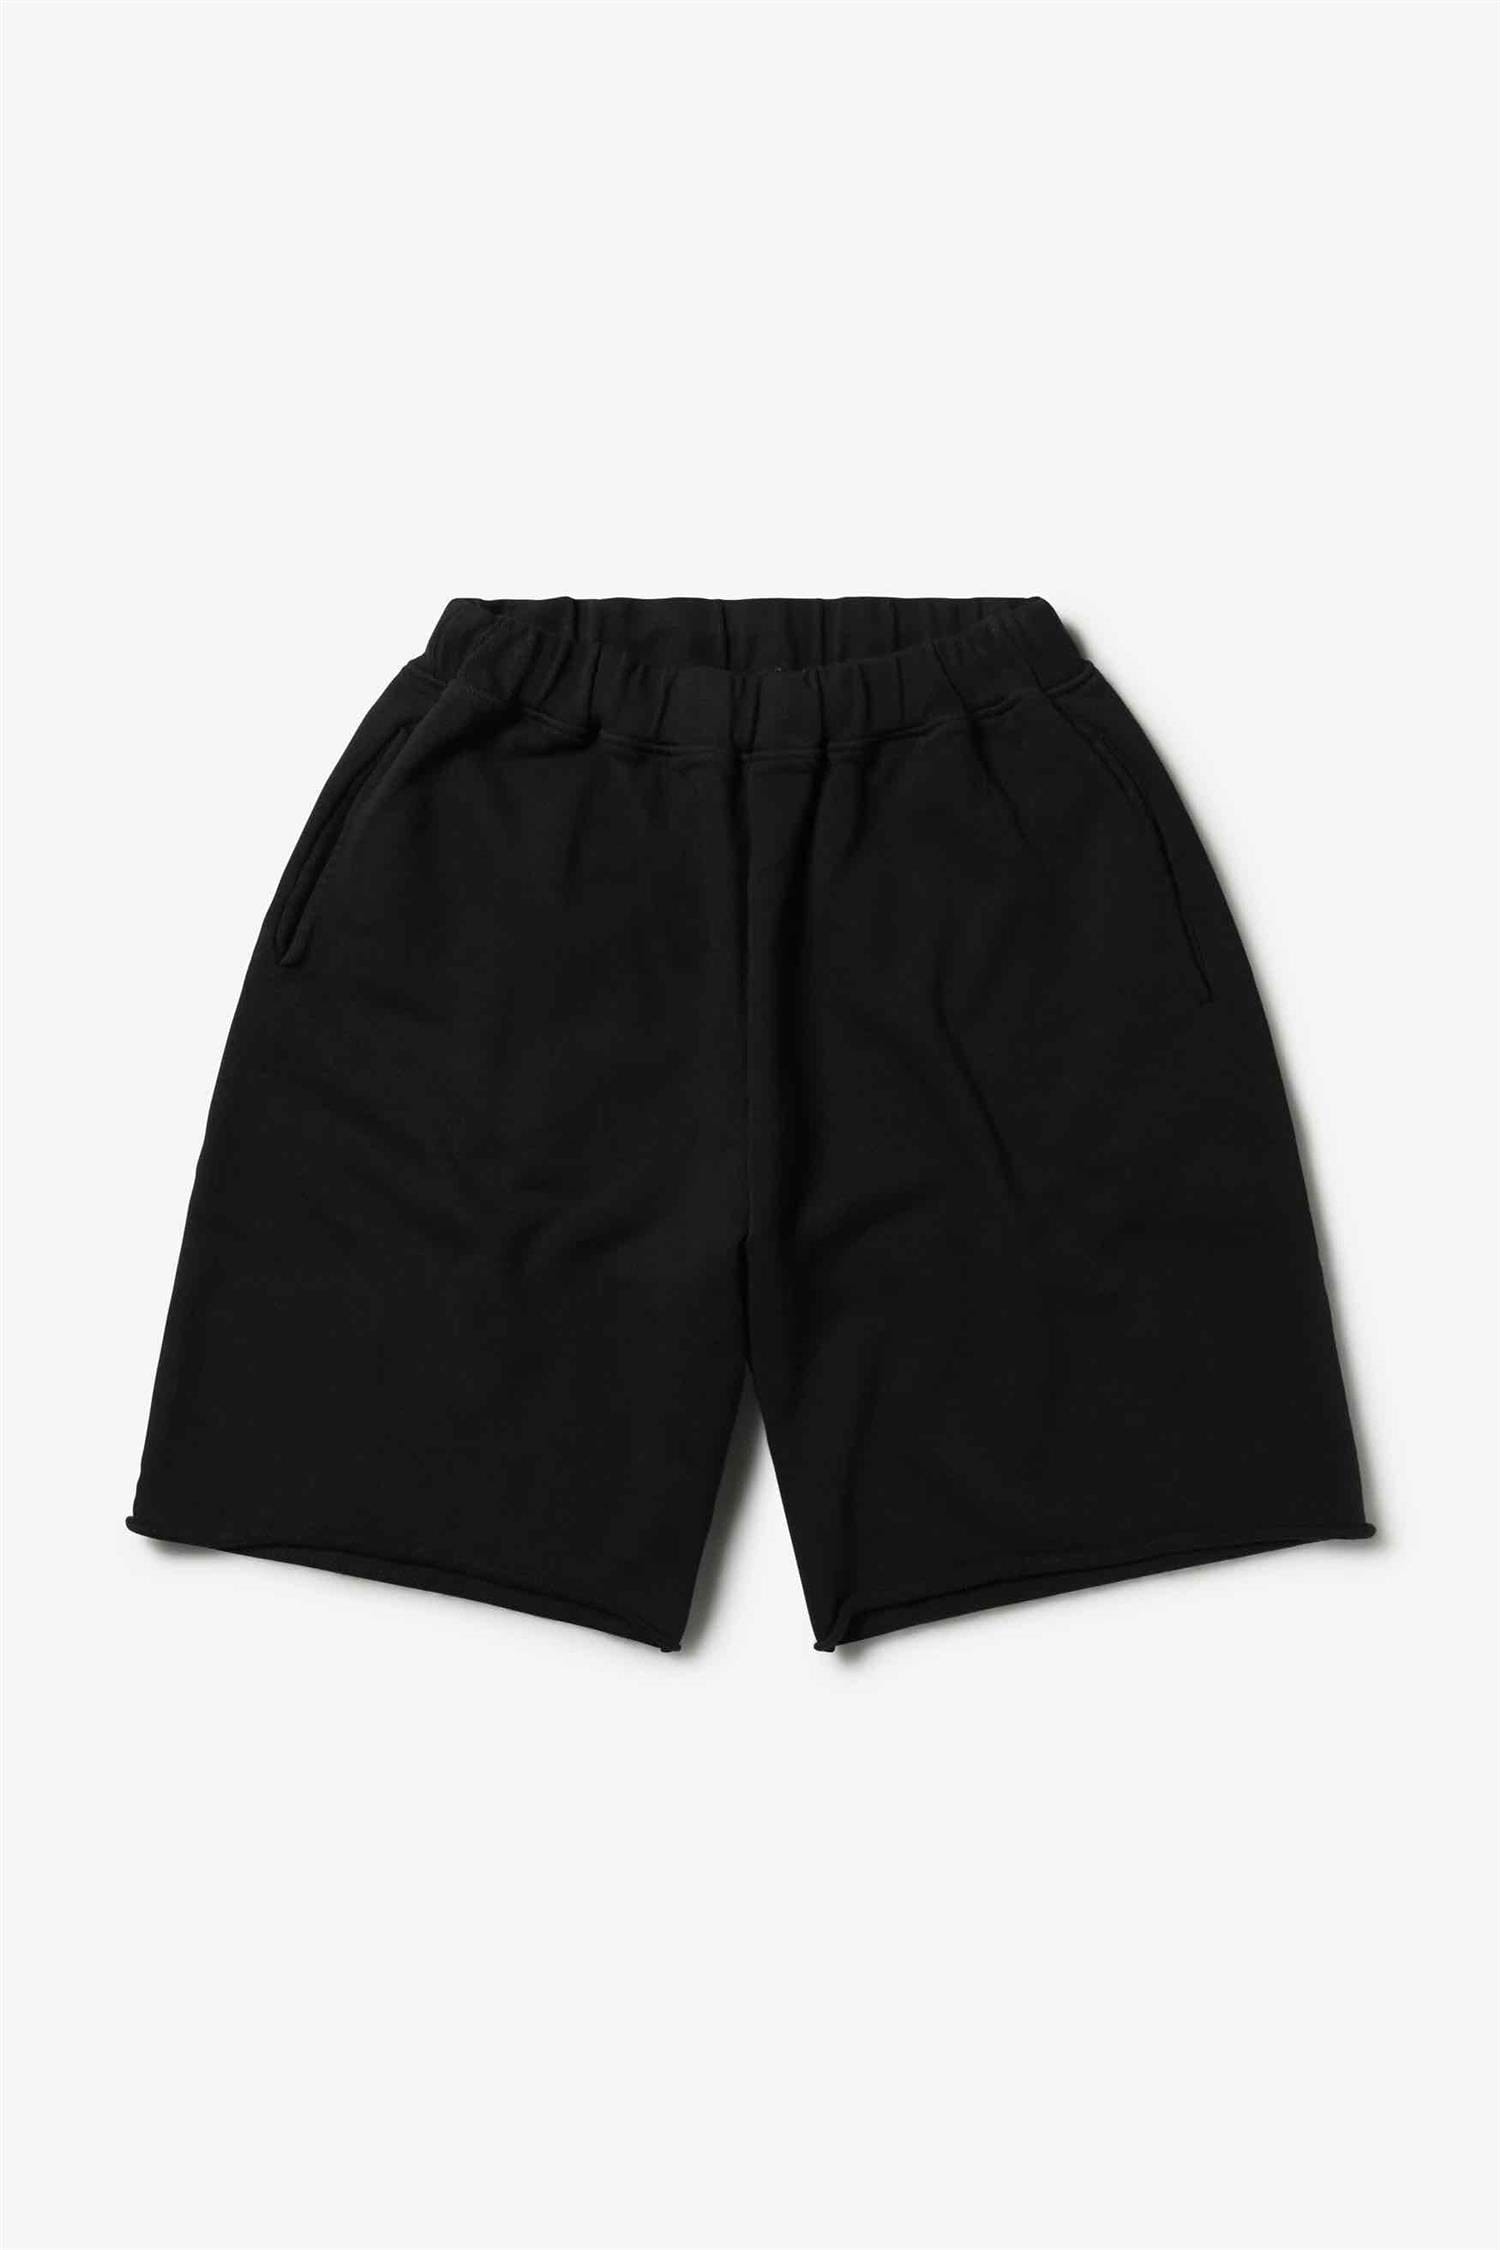 Aries Shorts Shorts | Premium Temple Sweatshort